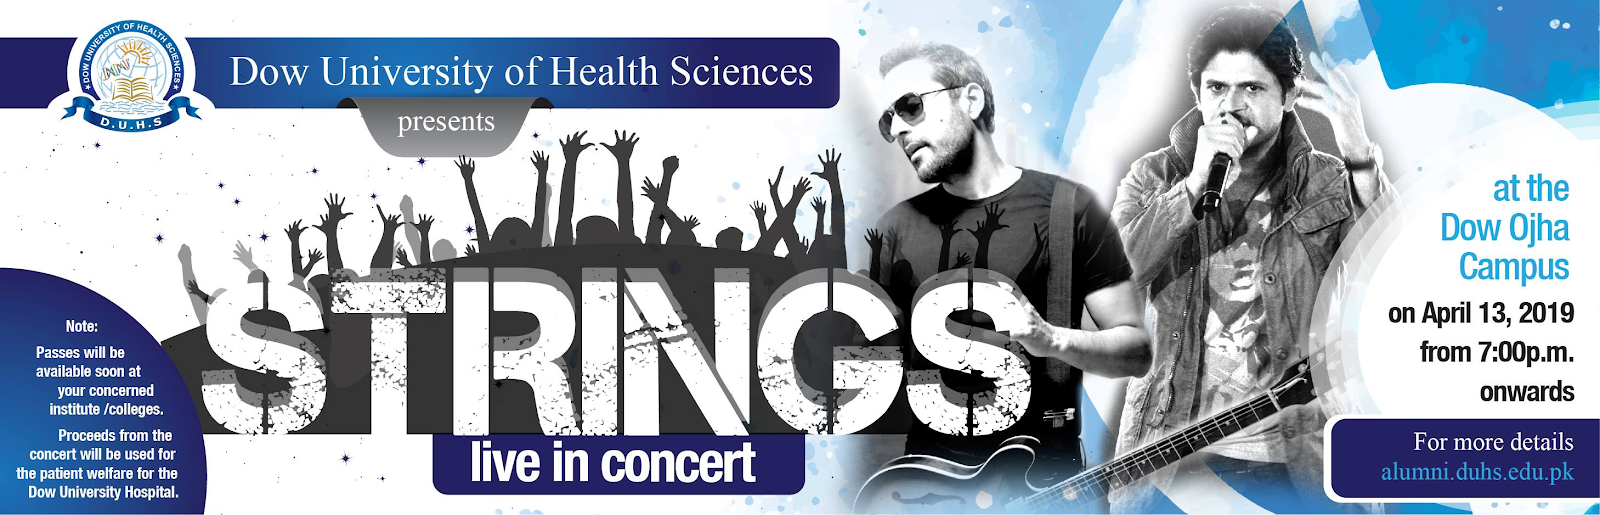 dow university fundraiser strings concert April 13